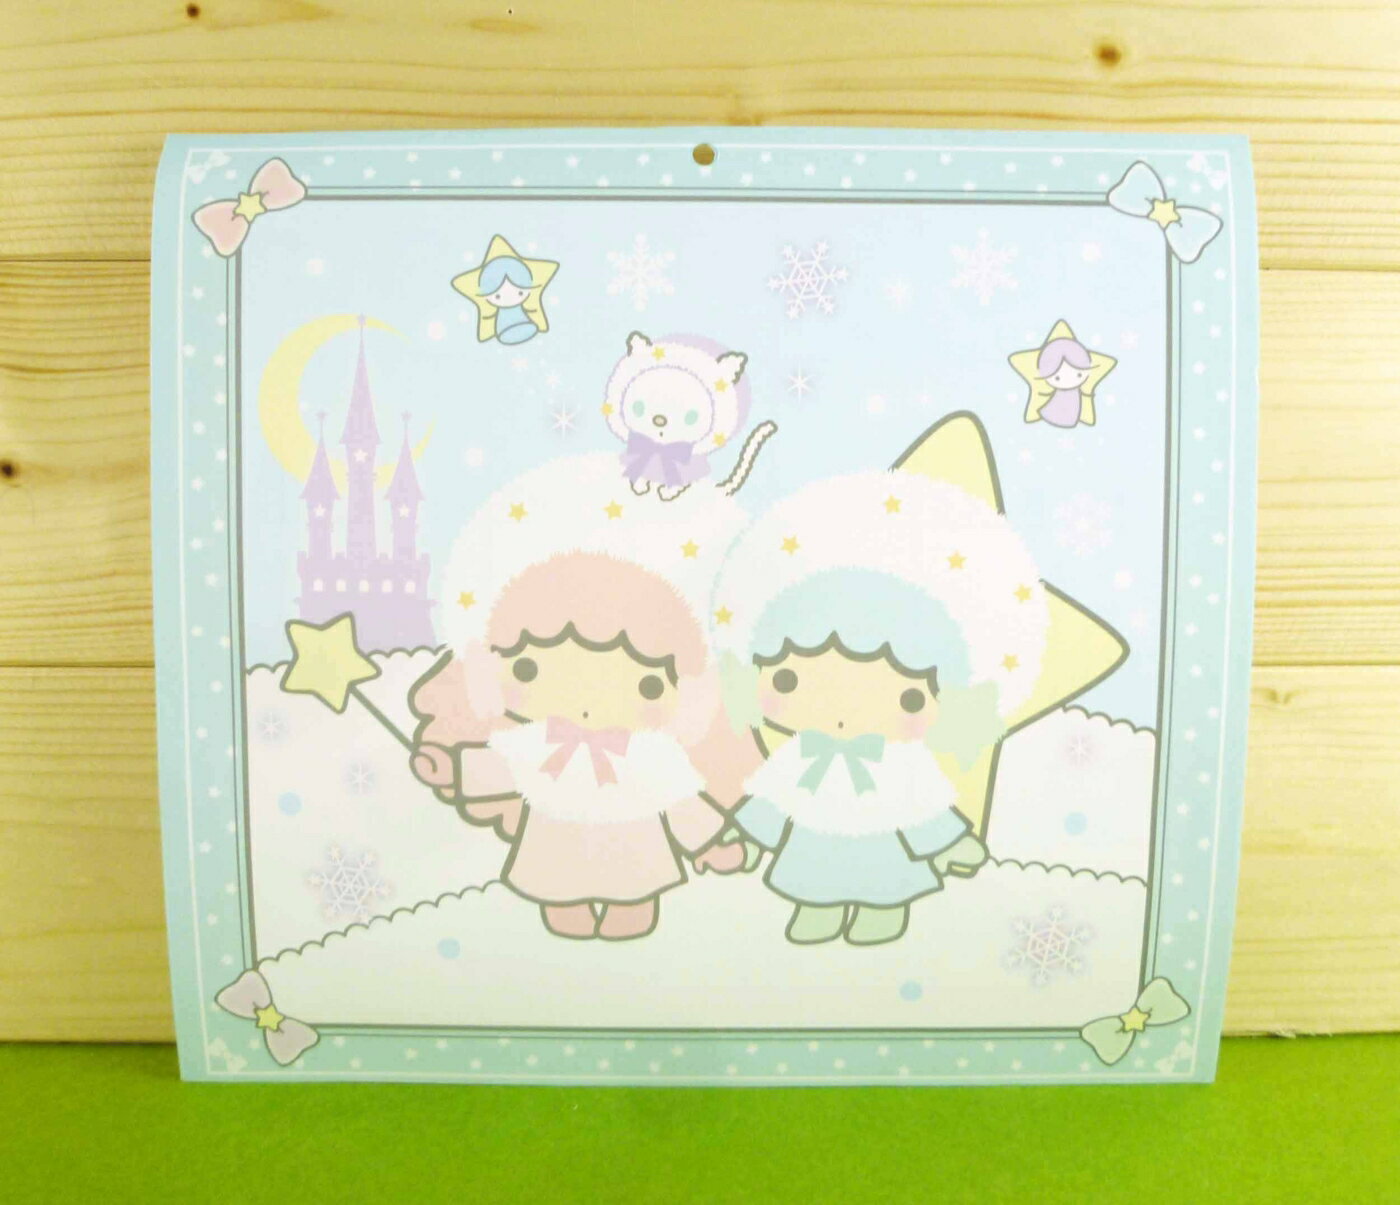 【震撼精品百貨】Little Twin Stars KiKi&LaLa 雙子星小天使 雙面卡片-藍雪人 震撼日式精品百貨